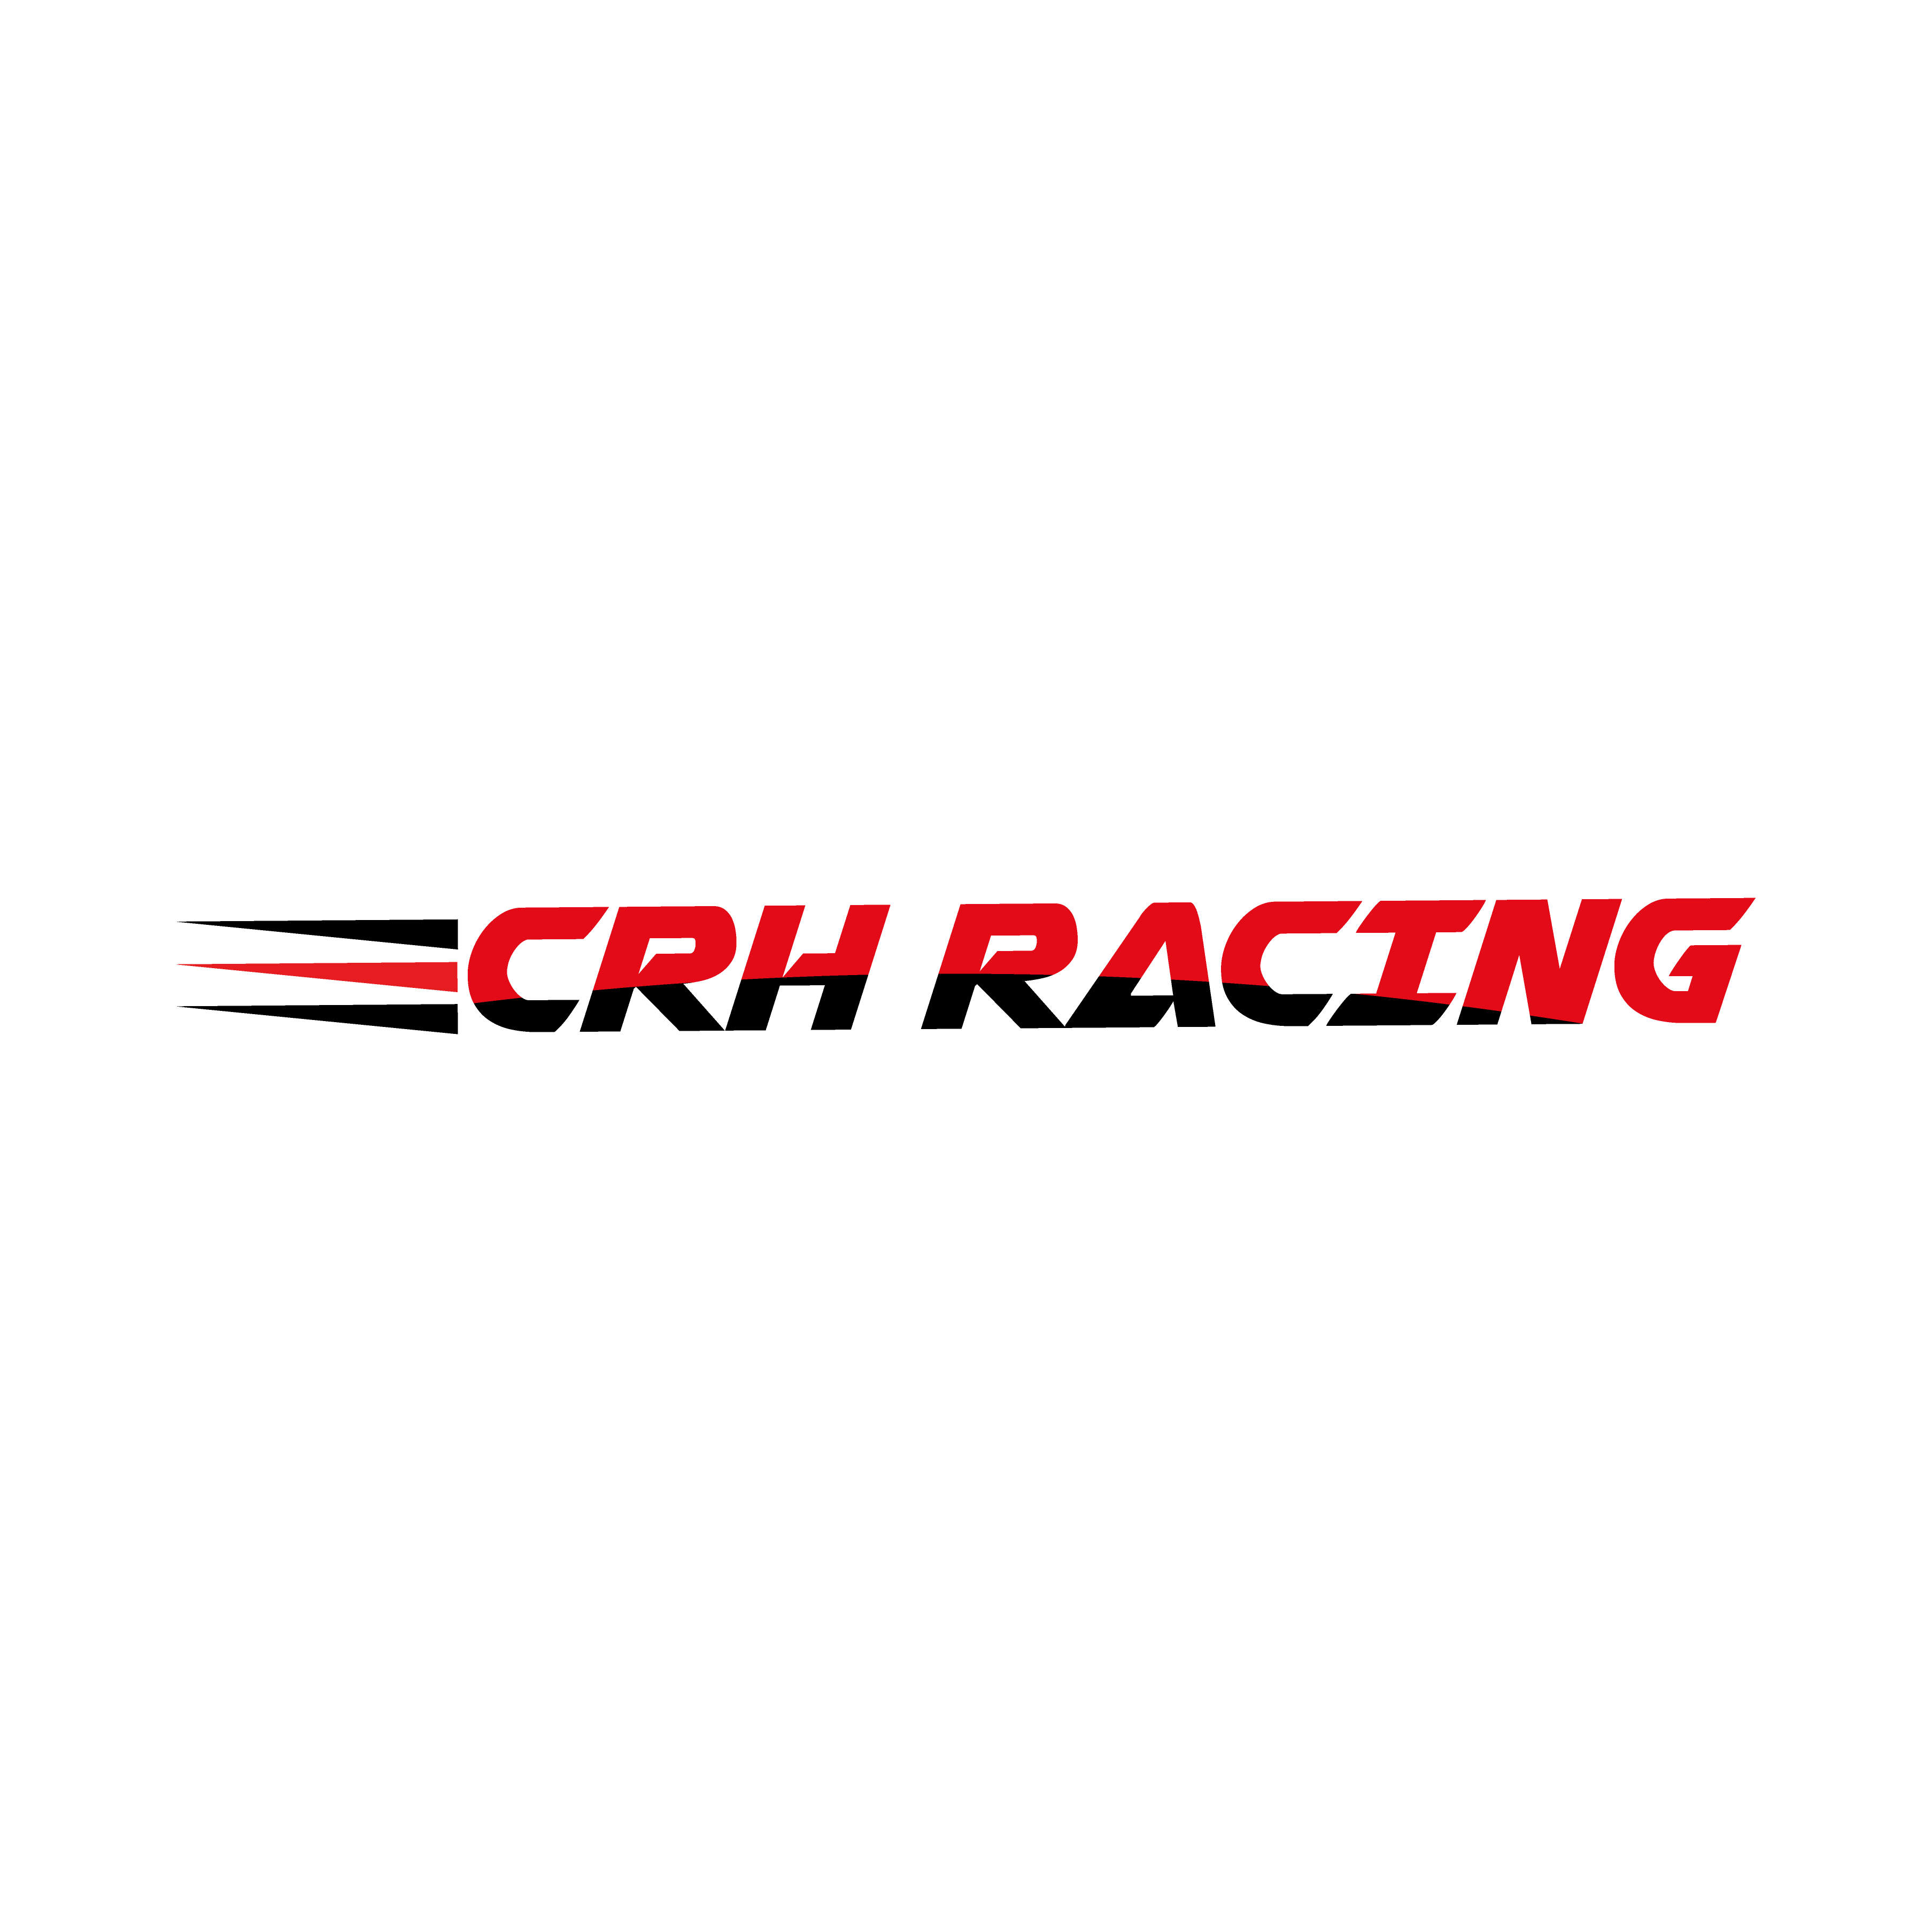 CRH Logo - File:CRH Racing Logo.png - Wikimedia Commons